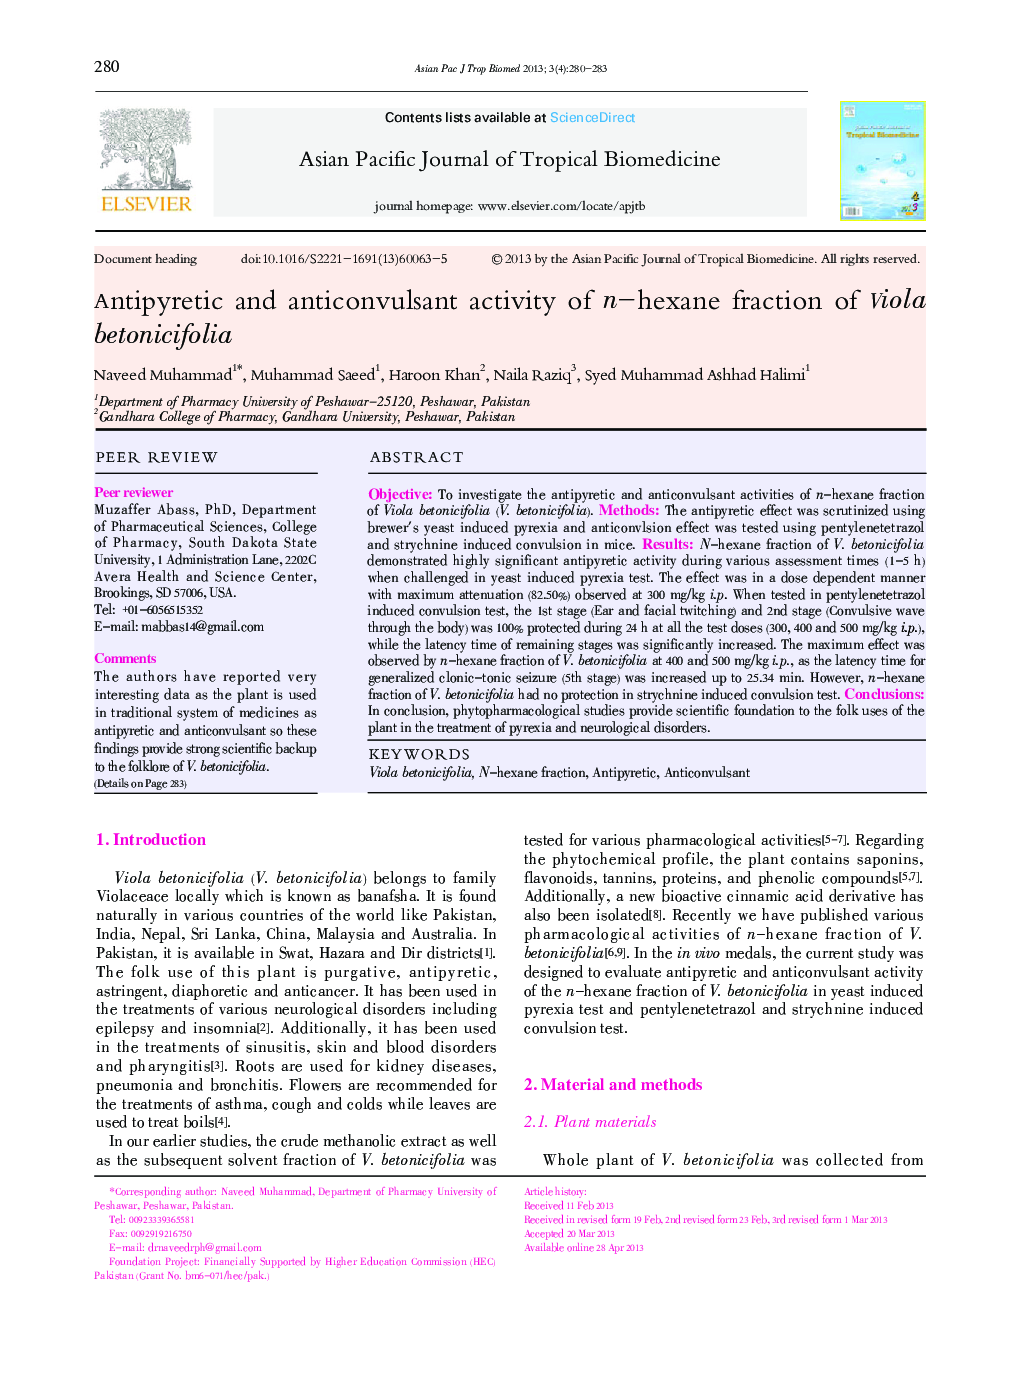 Antipyretic and anticonvulsant activity of n-hexane fraction of Viola betonicifolia